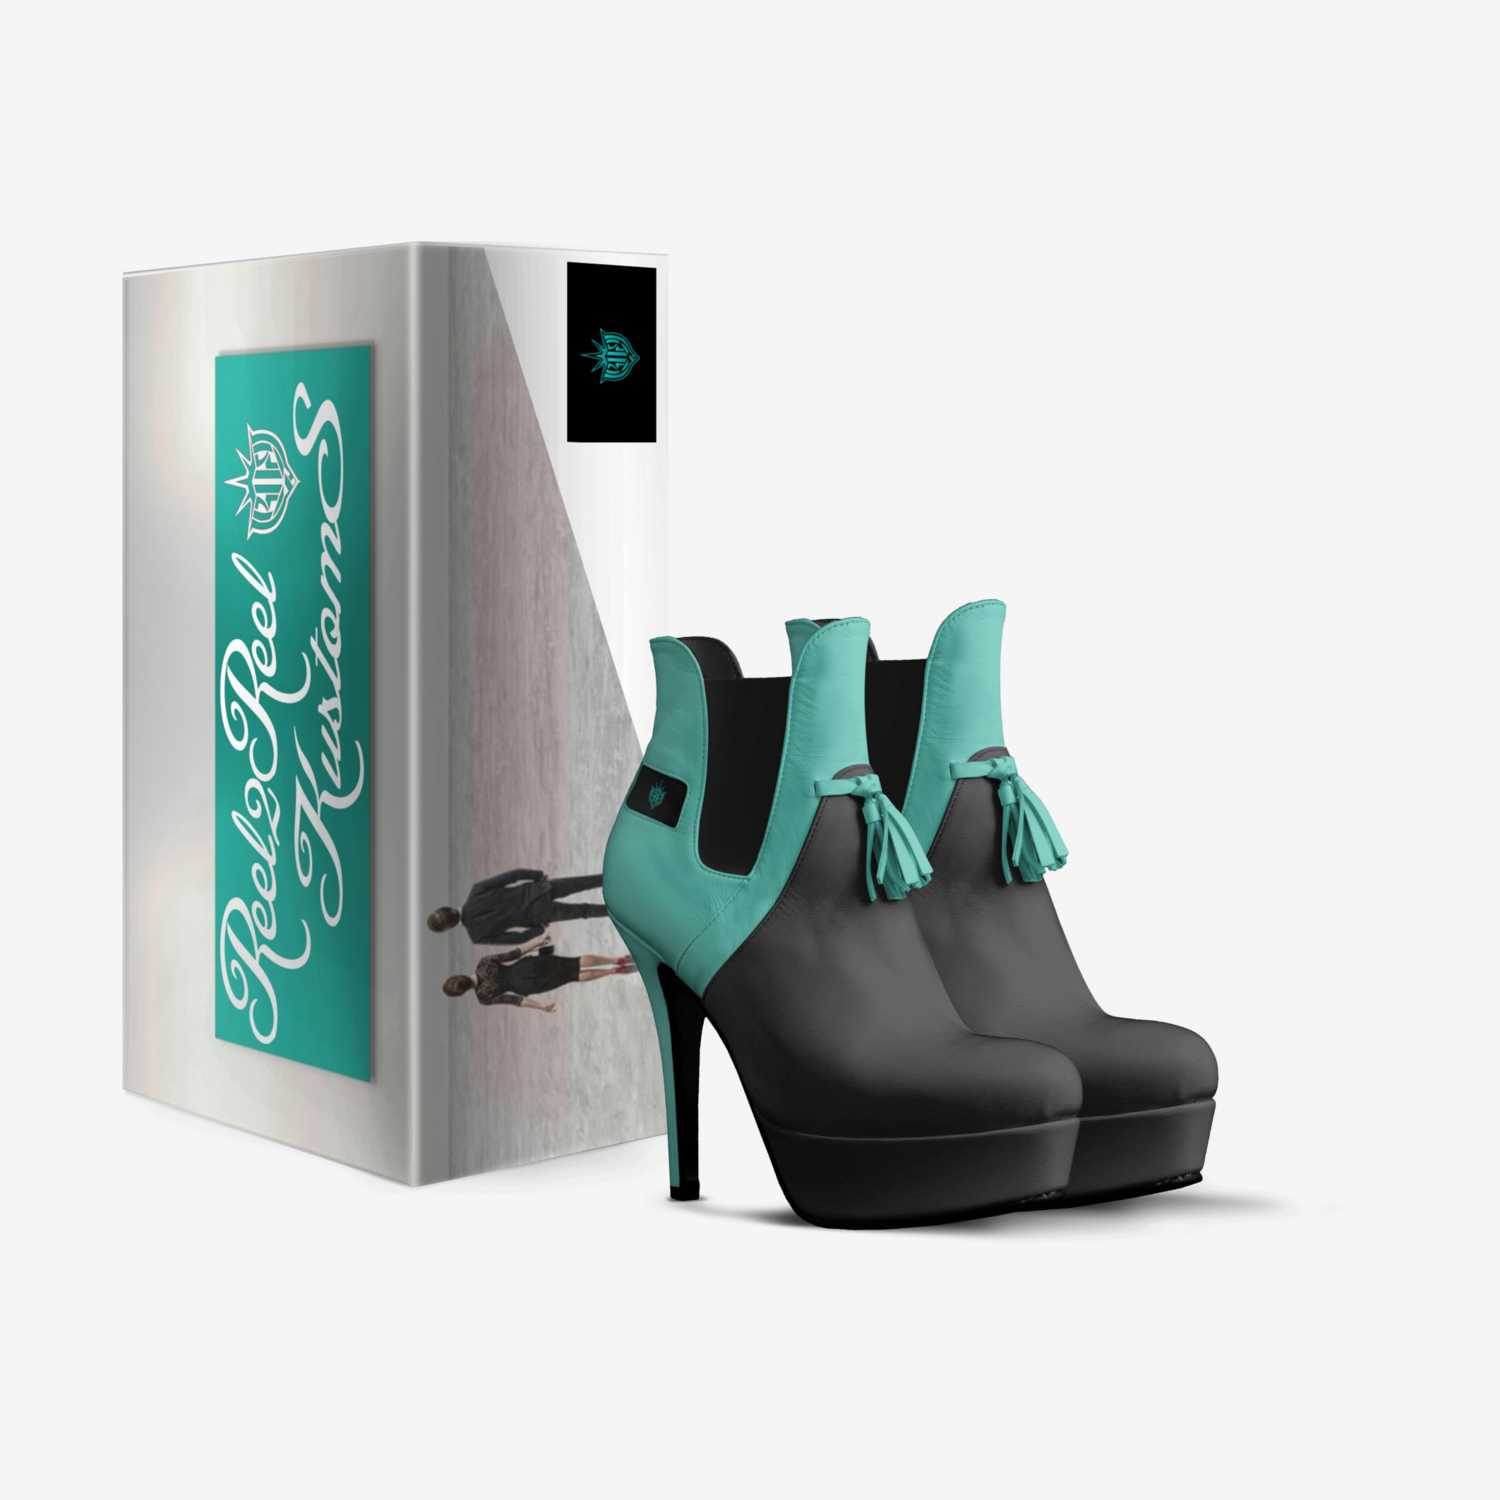 Divasden custom made in Italy shoes by Reel2reel Kustoms | Box view